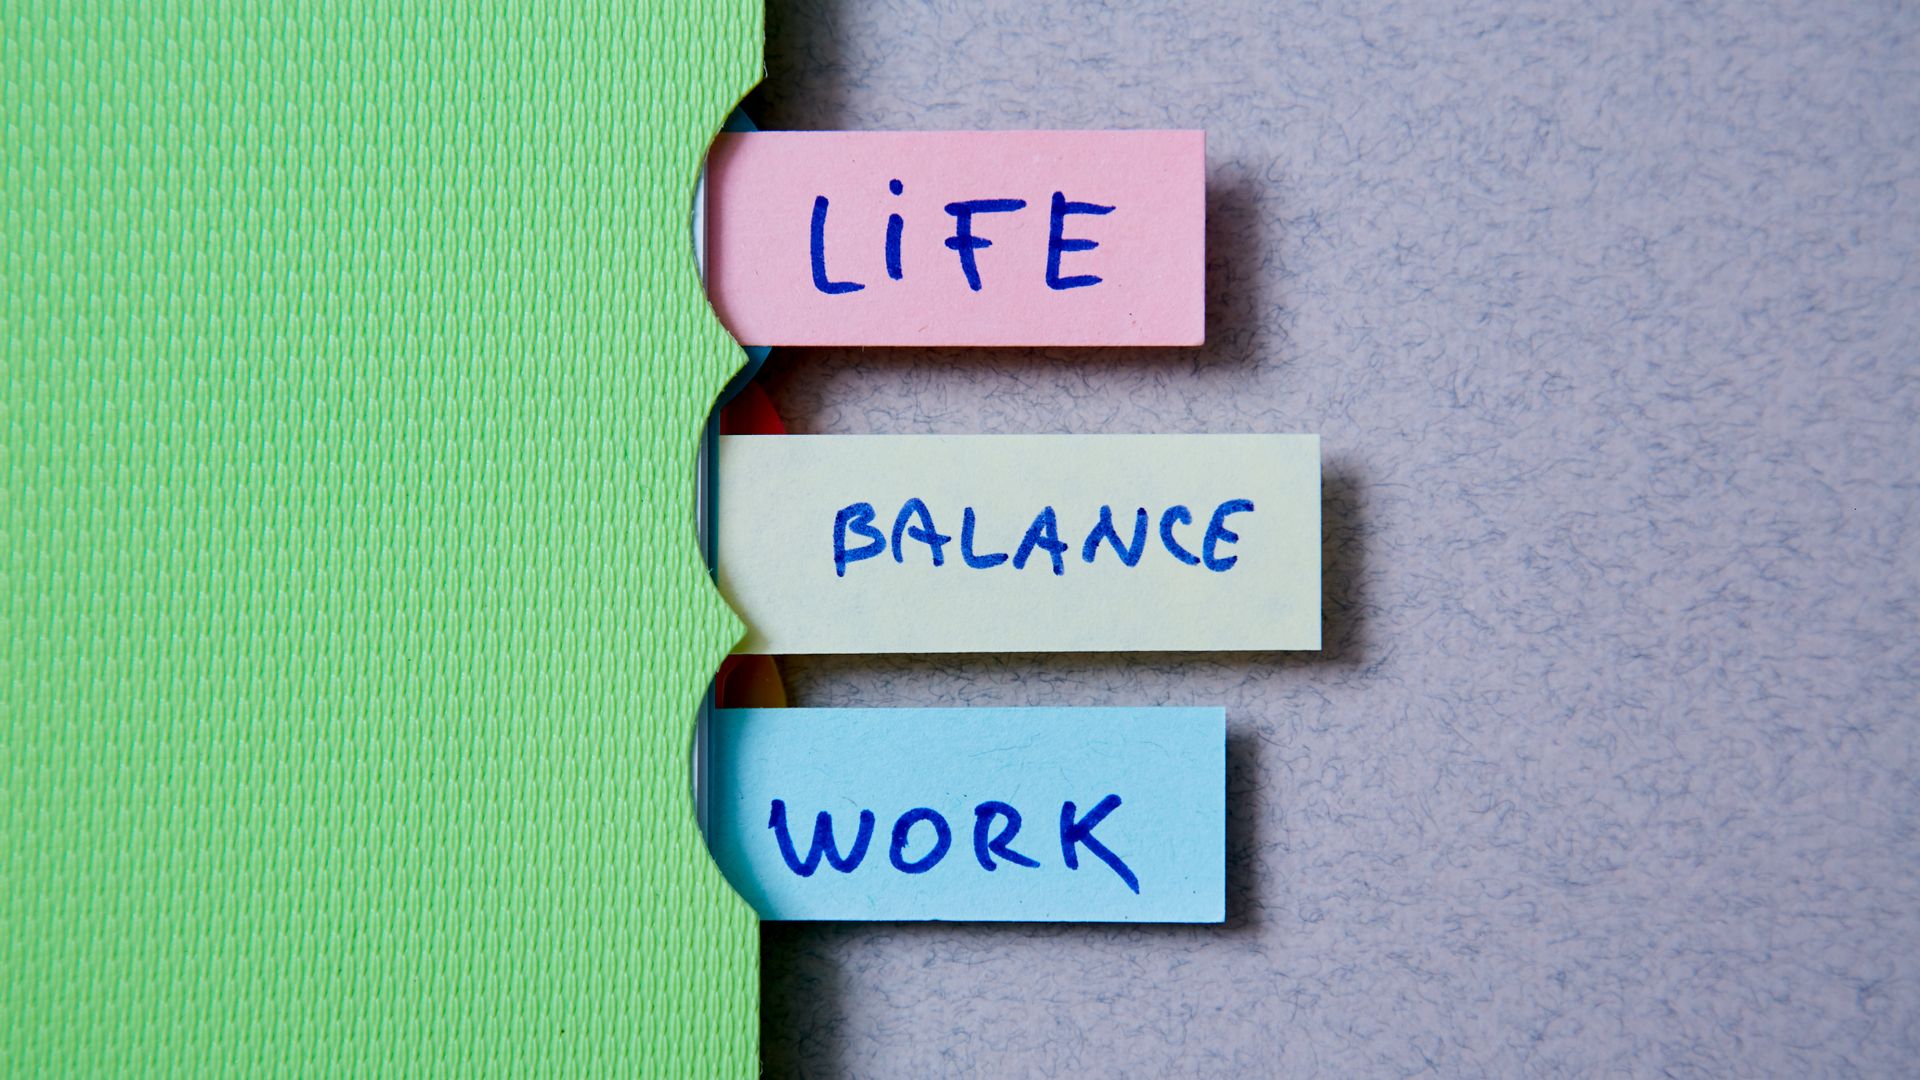 Work-Life Balance. New life work